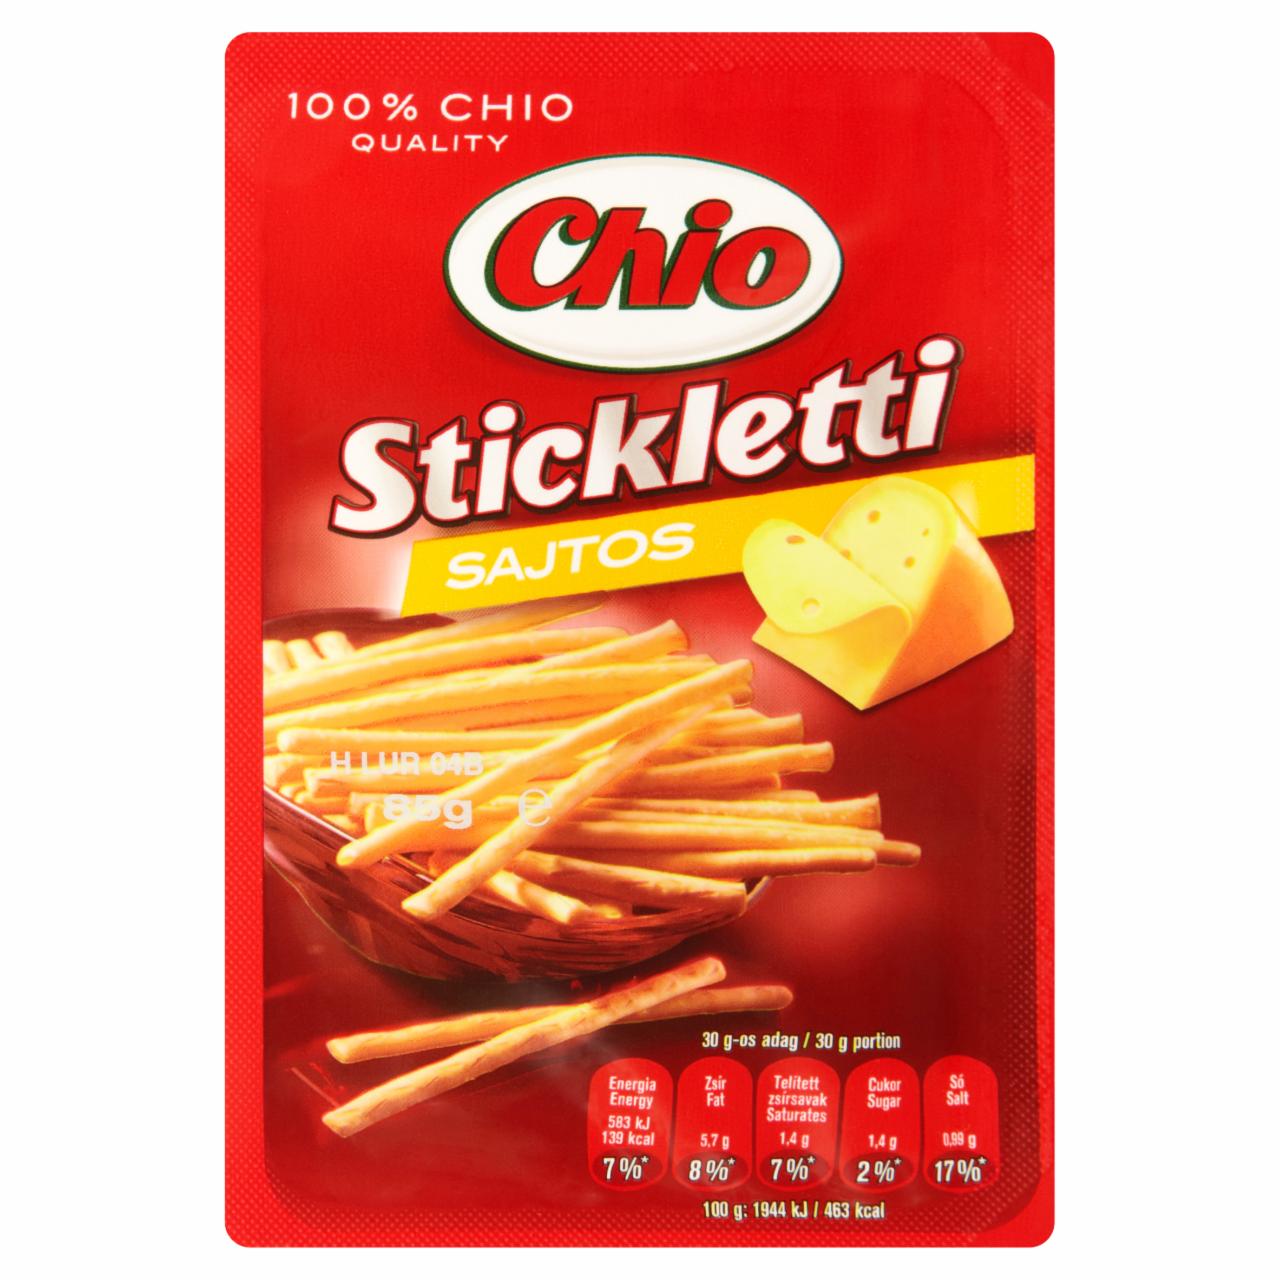 Képek - Chio Stickletti sajtos pálcika 85 g